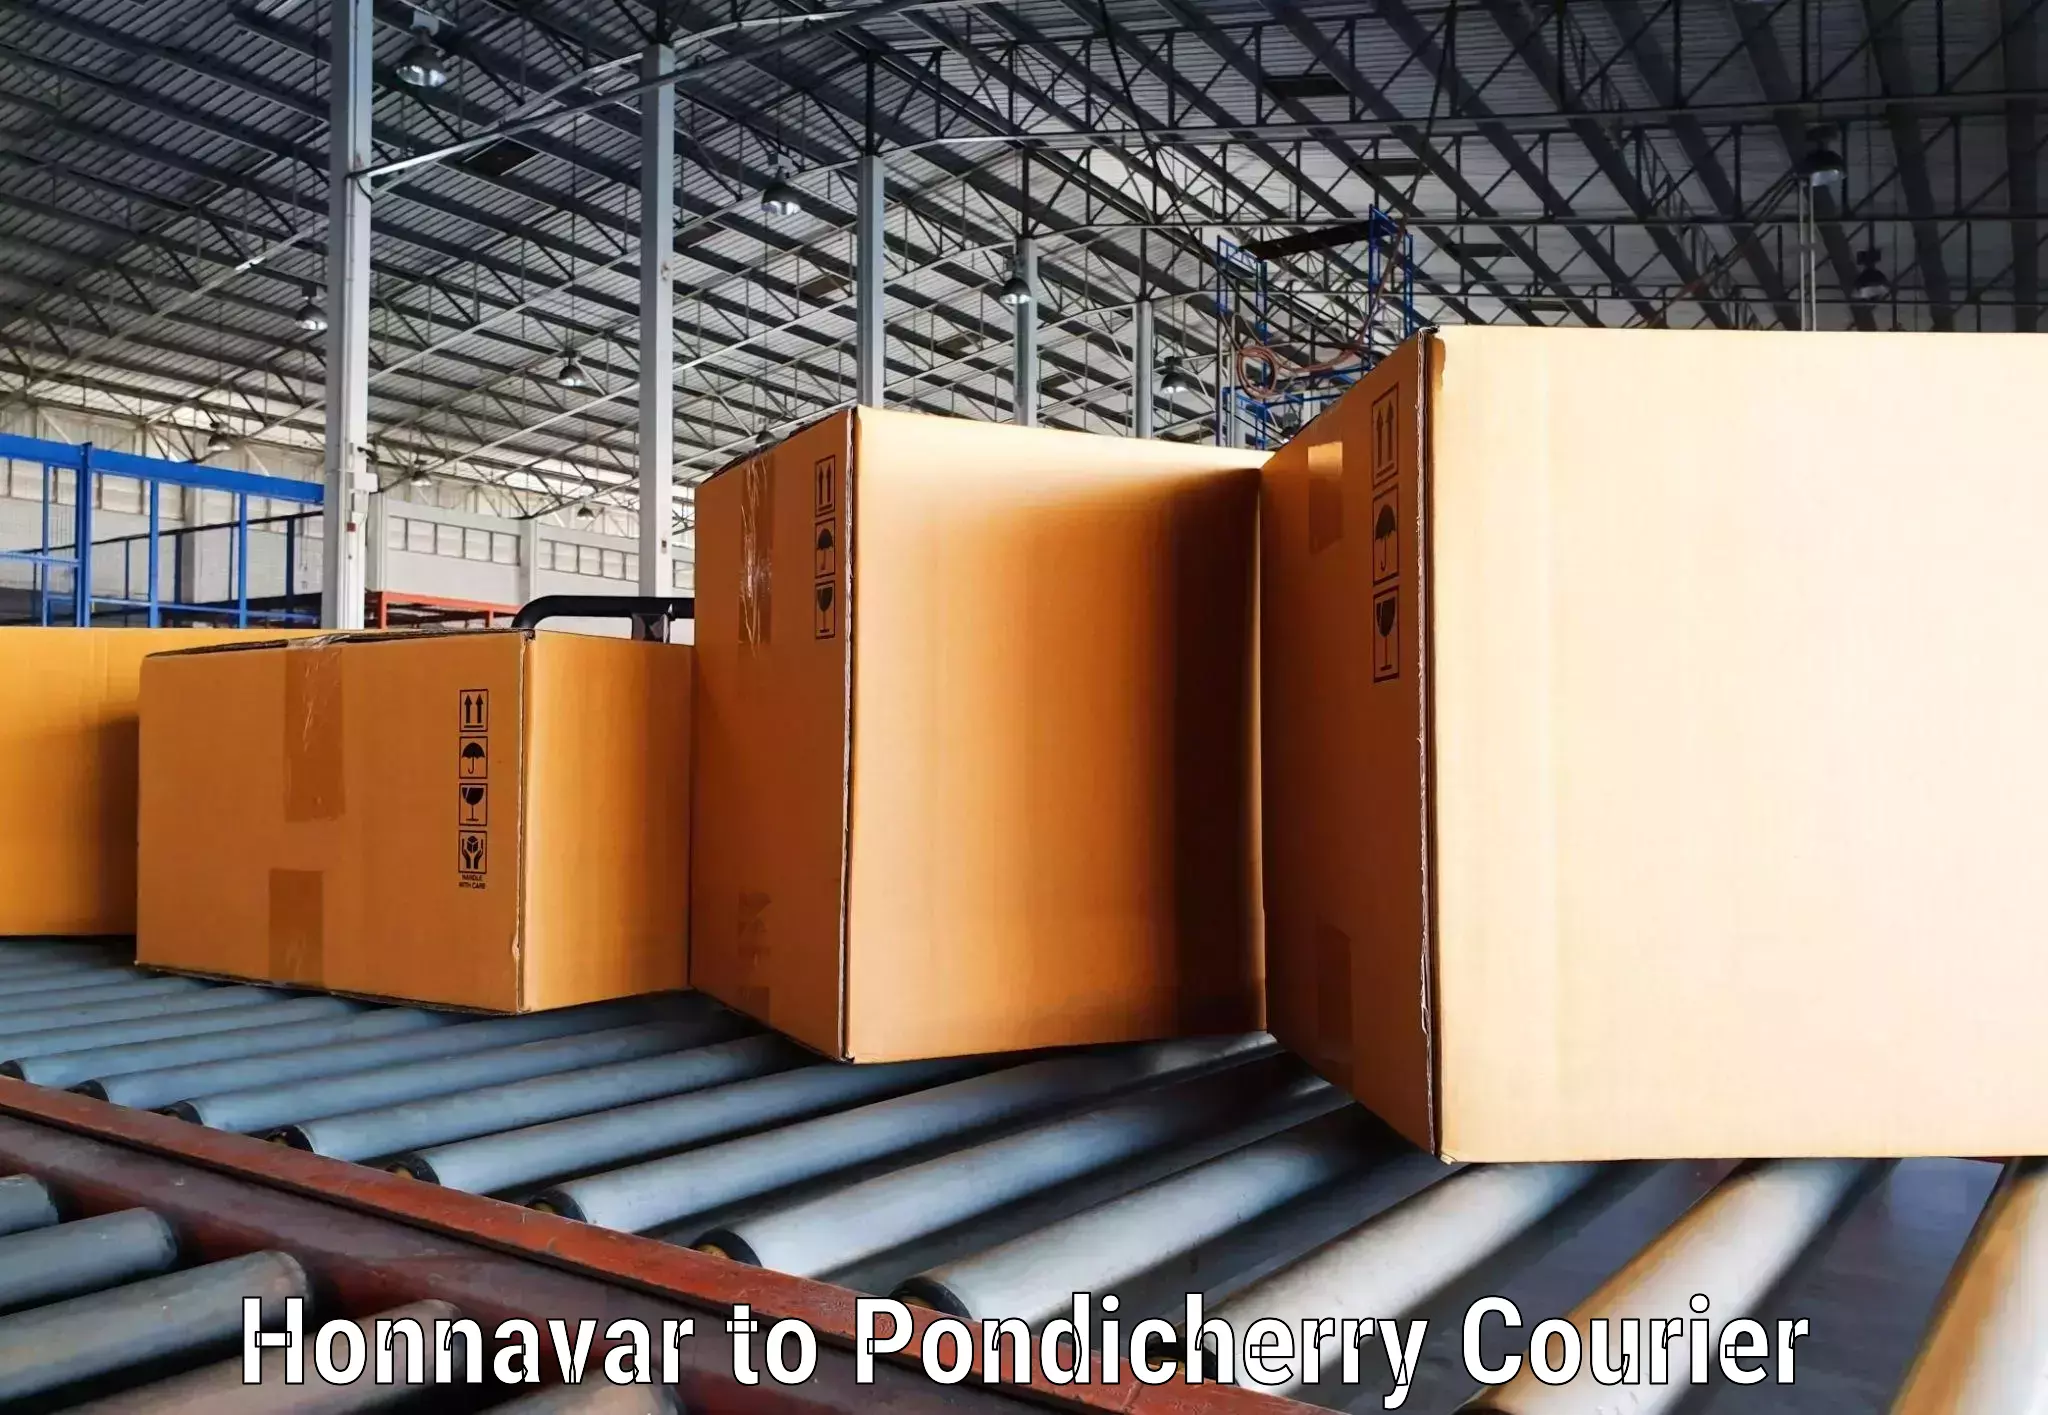 Courier service efficiency Honnavar to Metttupalayam